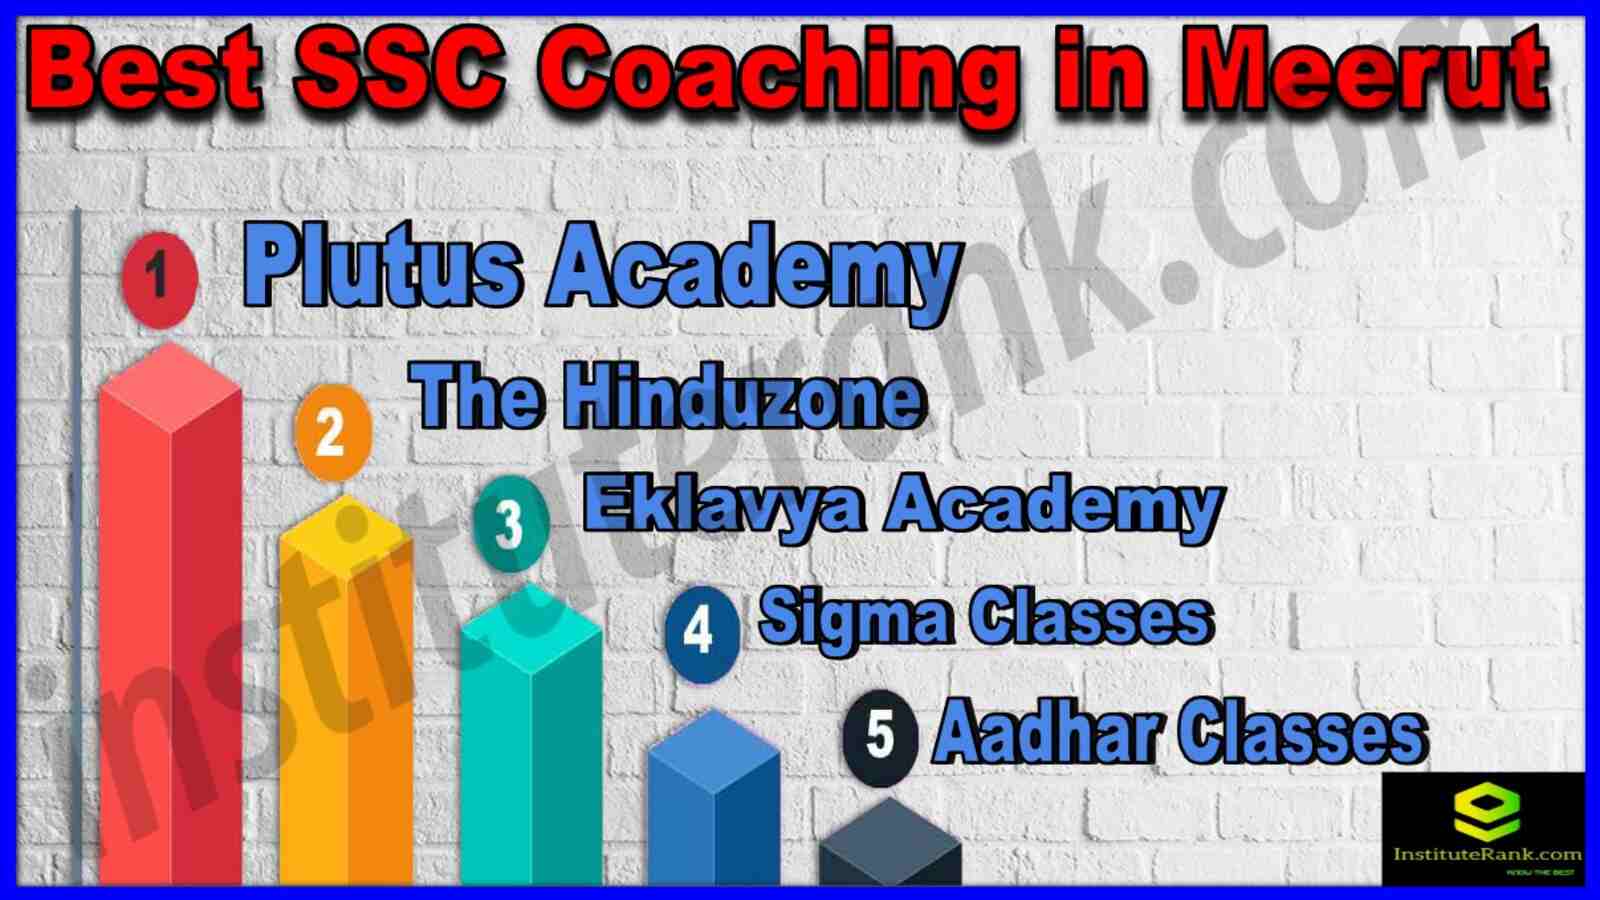 Best SSC Coaching in Meerut 2022